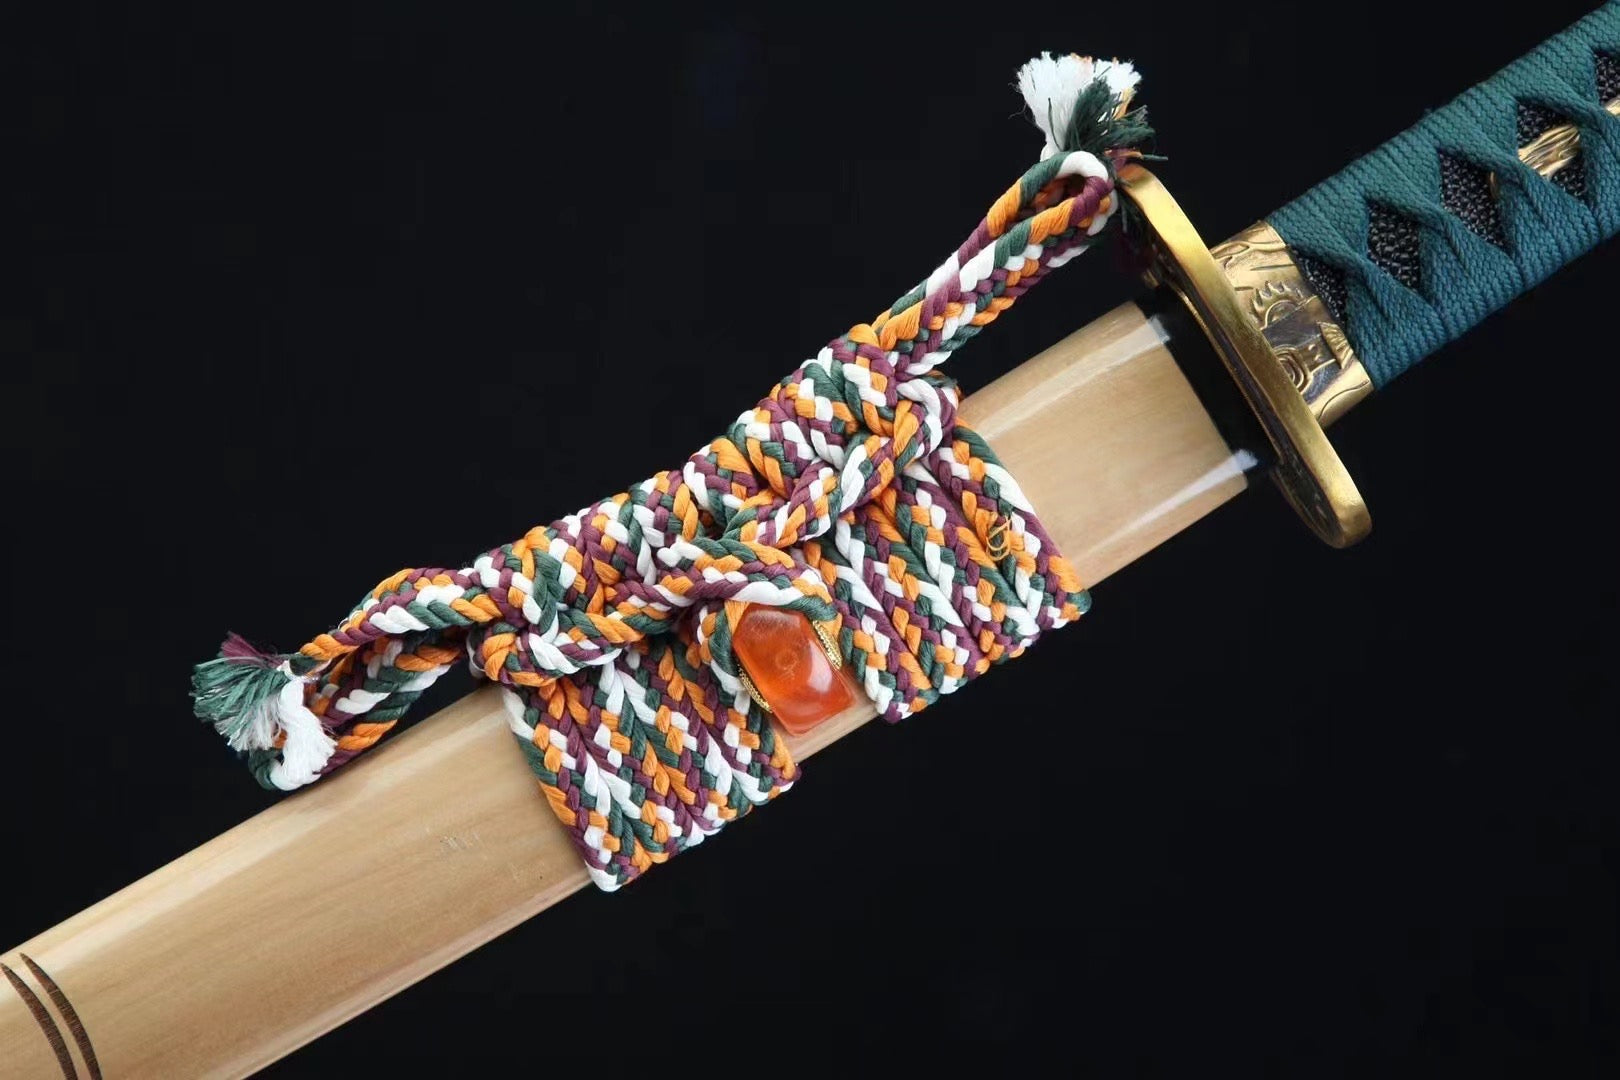 T10 High Carbon Steel Clay Tempered With Hamon Sword Yellow Dragon Katana Sword,Real Handmade Japanese Samurai Sword Full Tang